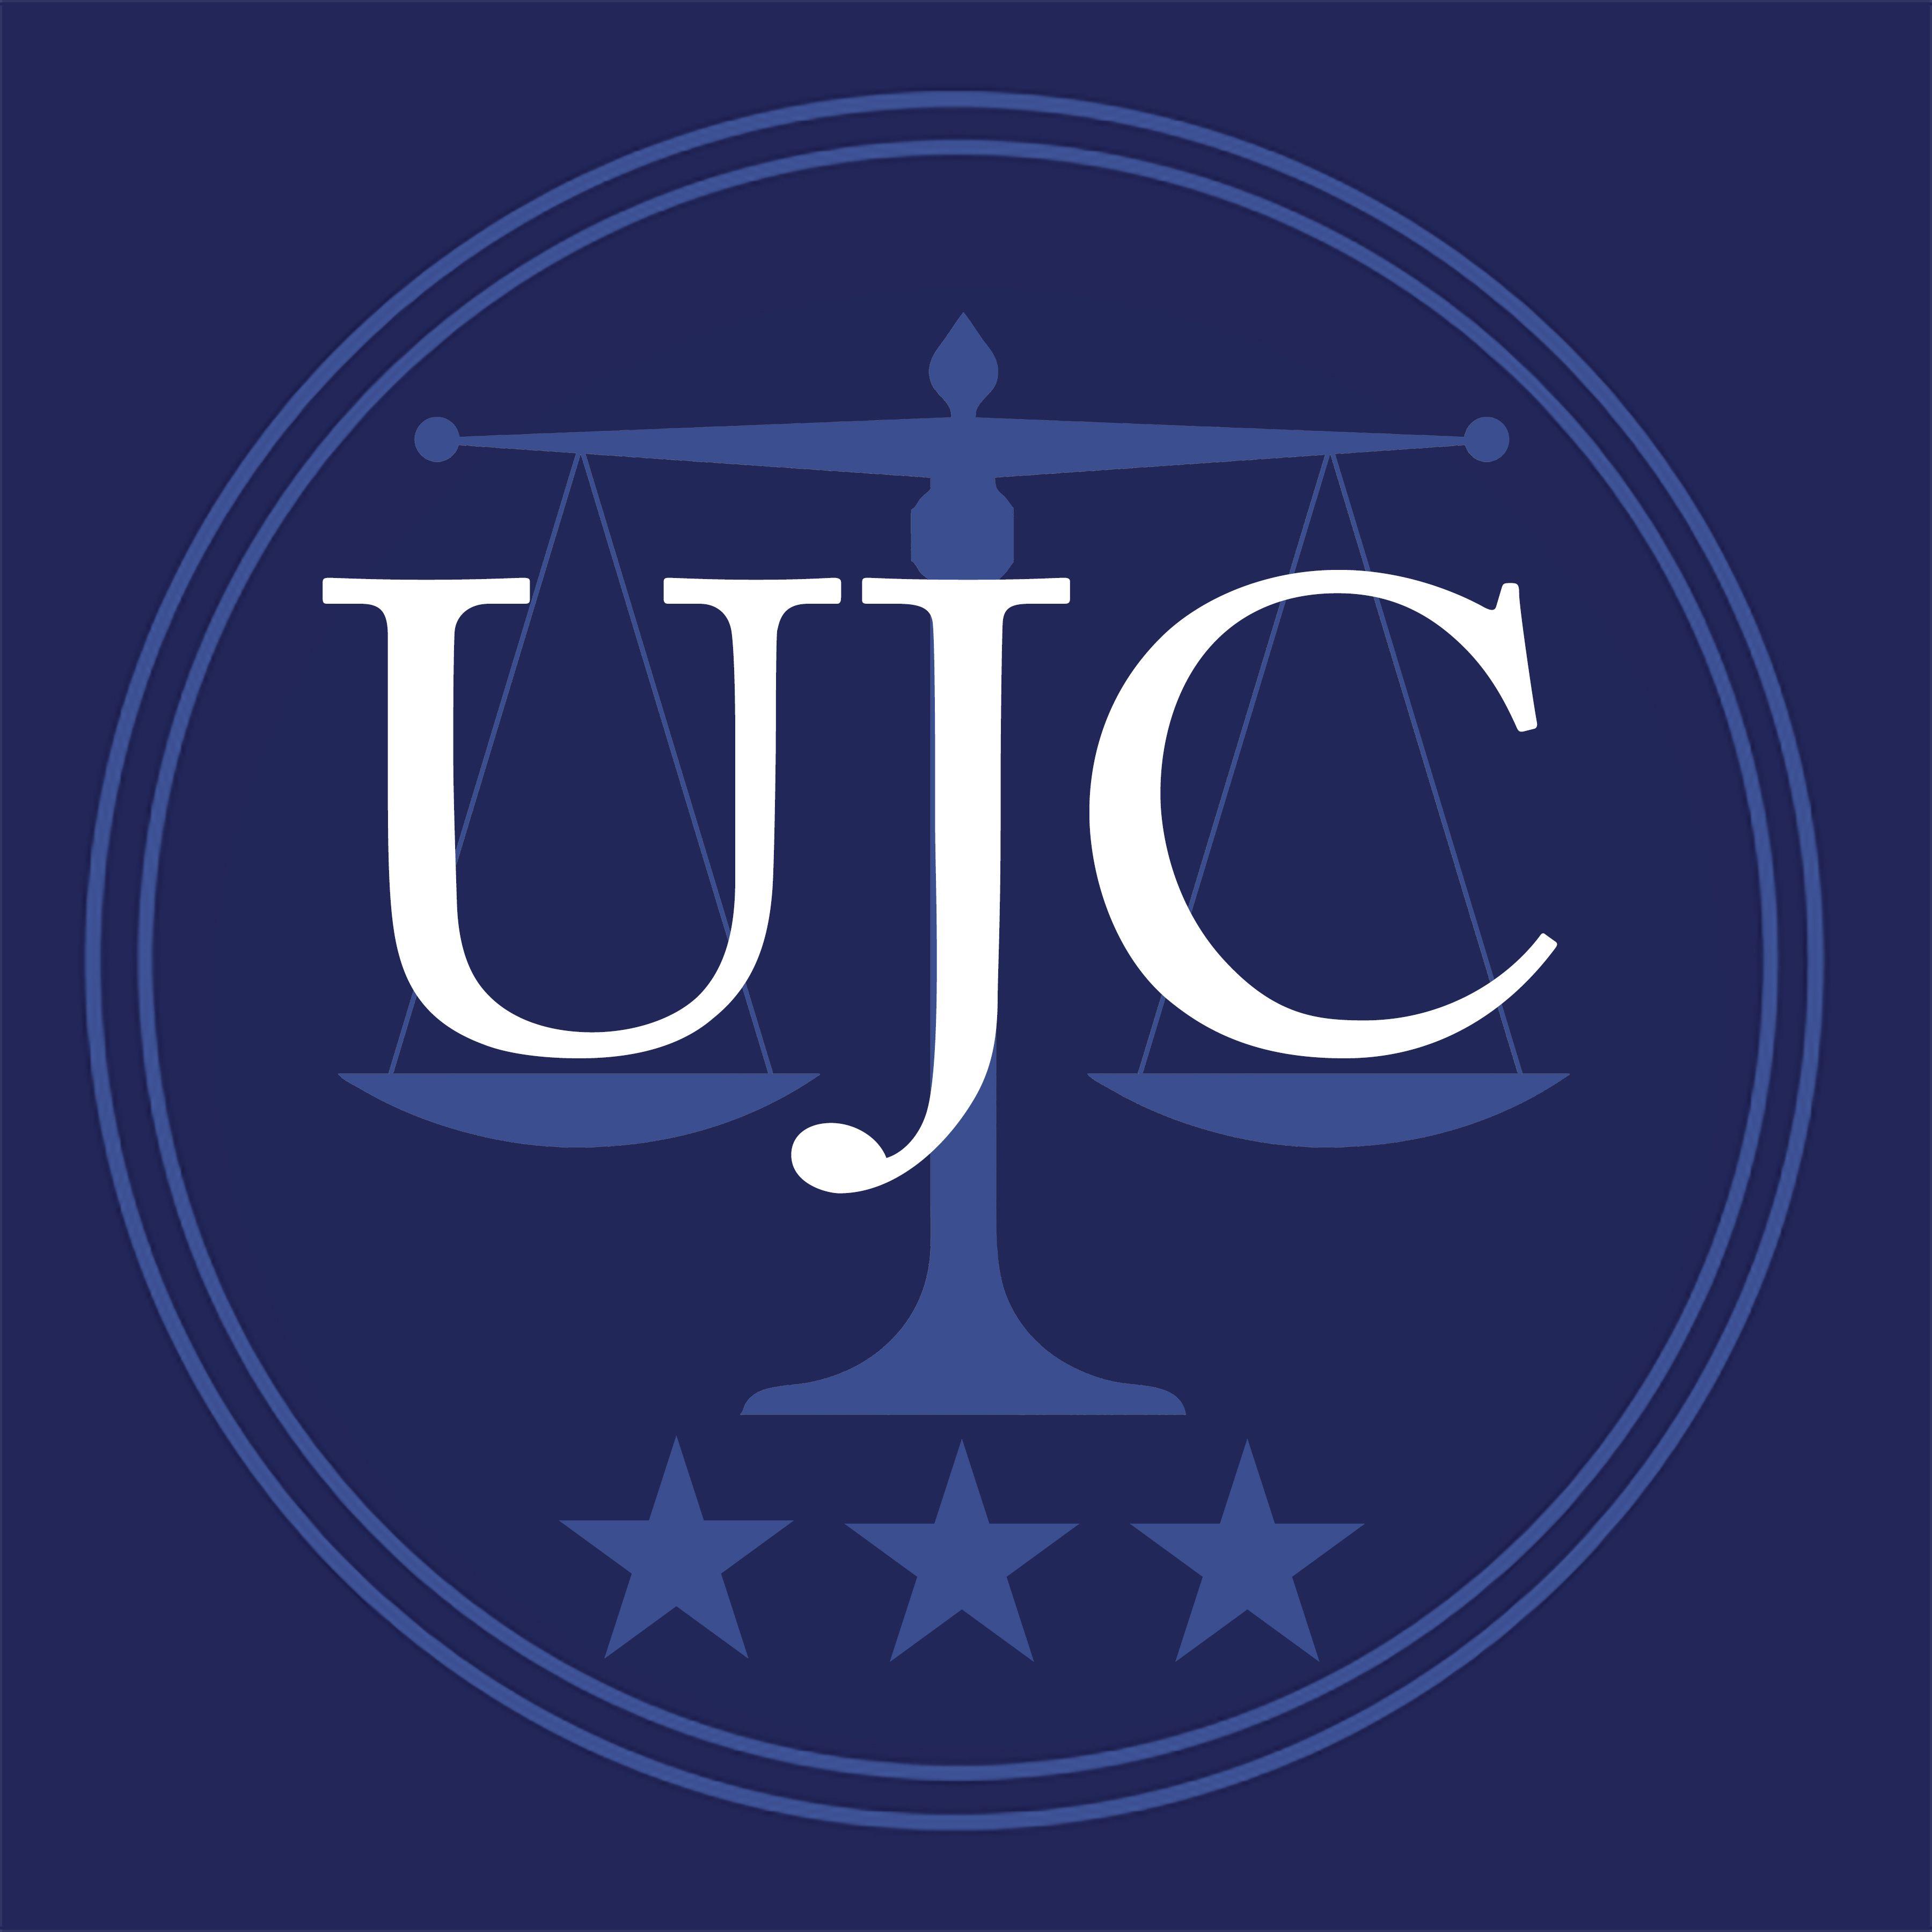 Judiciary Logo - University Judiciary Committee of Virginia